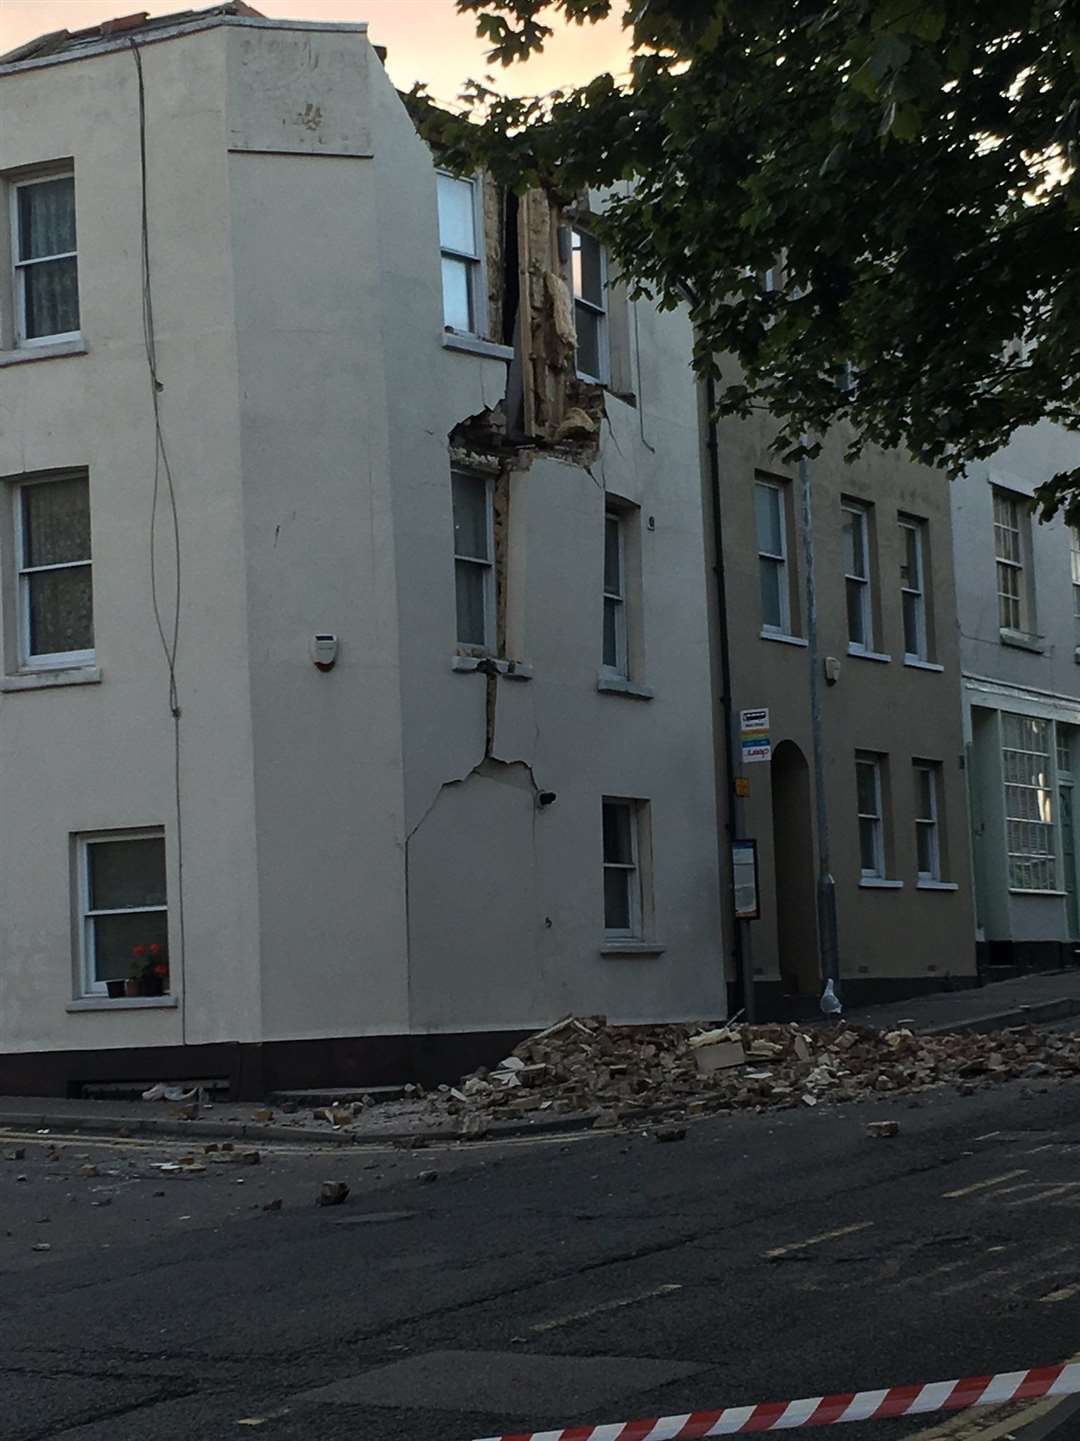 Building collapses in Ramsgate. Picture: David Gravener